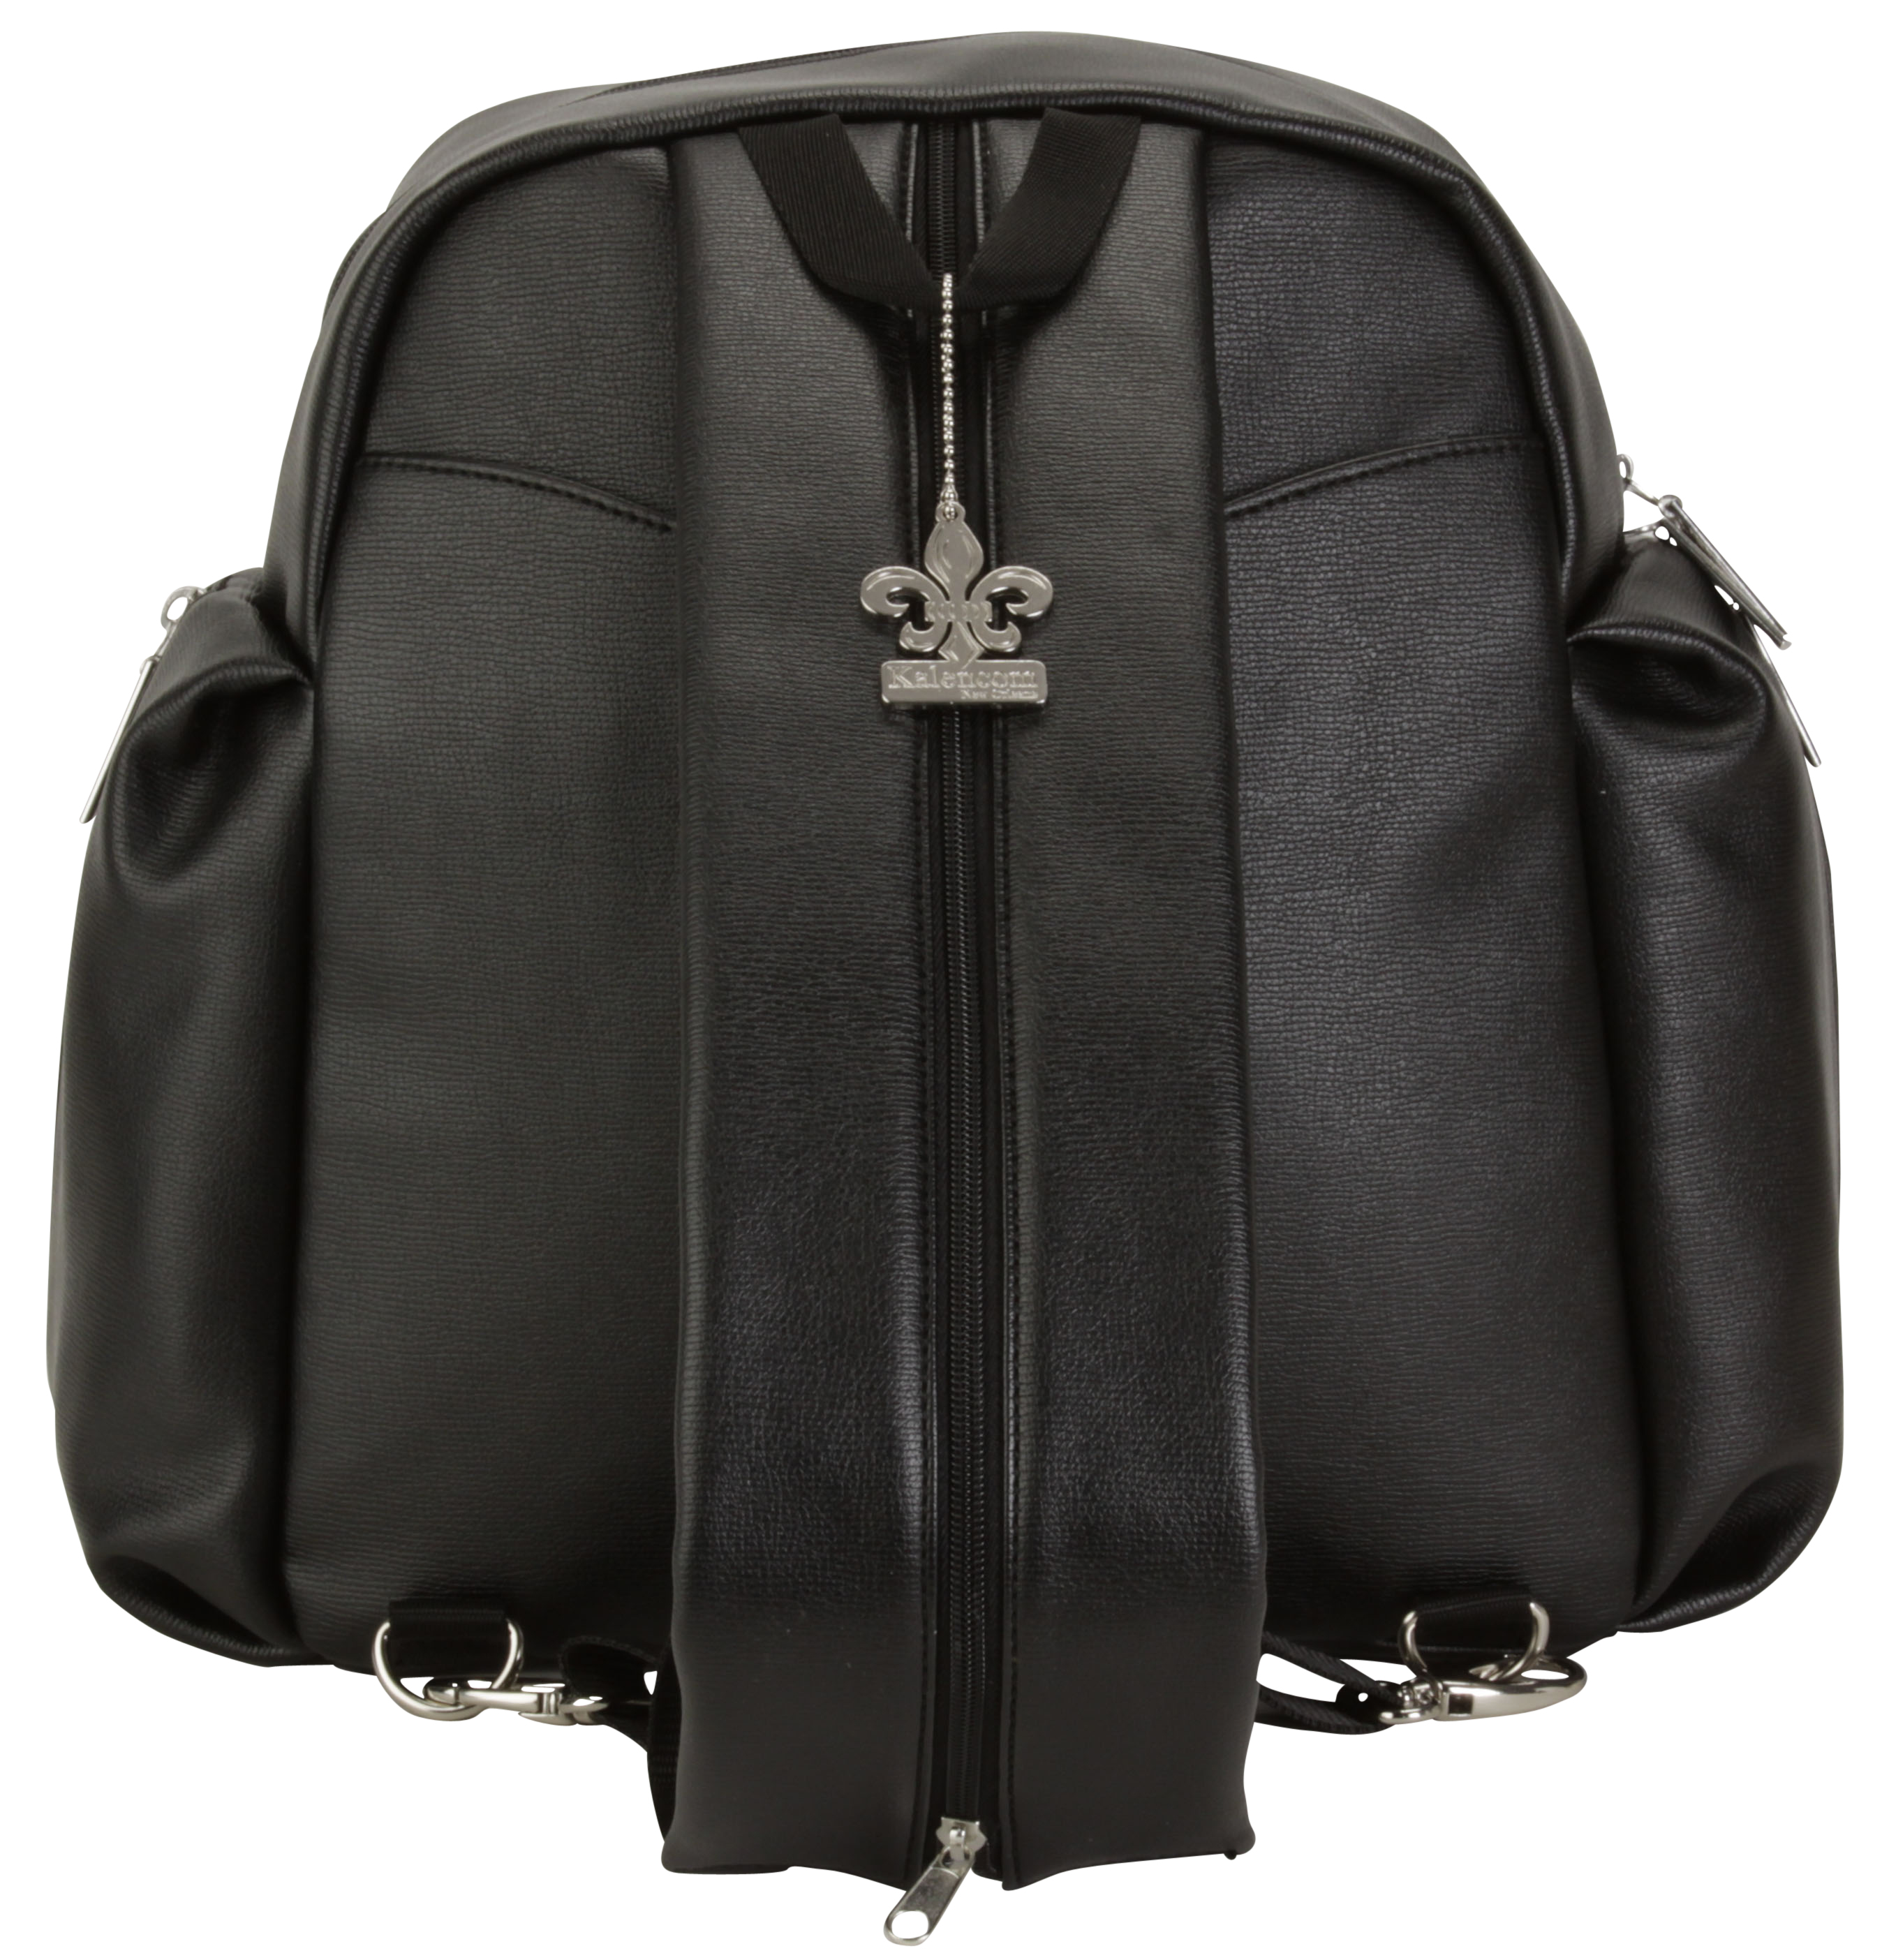 Kalencom Chicago Backpack / Urban Sling Diaper Bag in Black Vegan - image 2 of 4